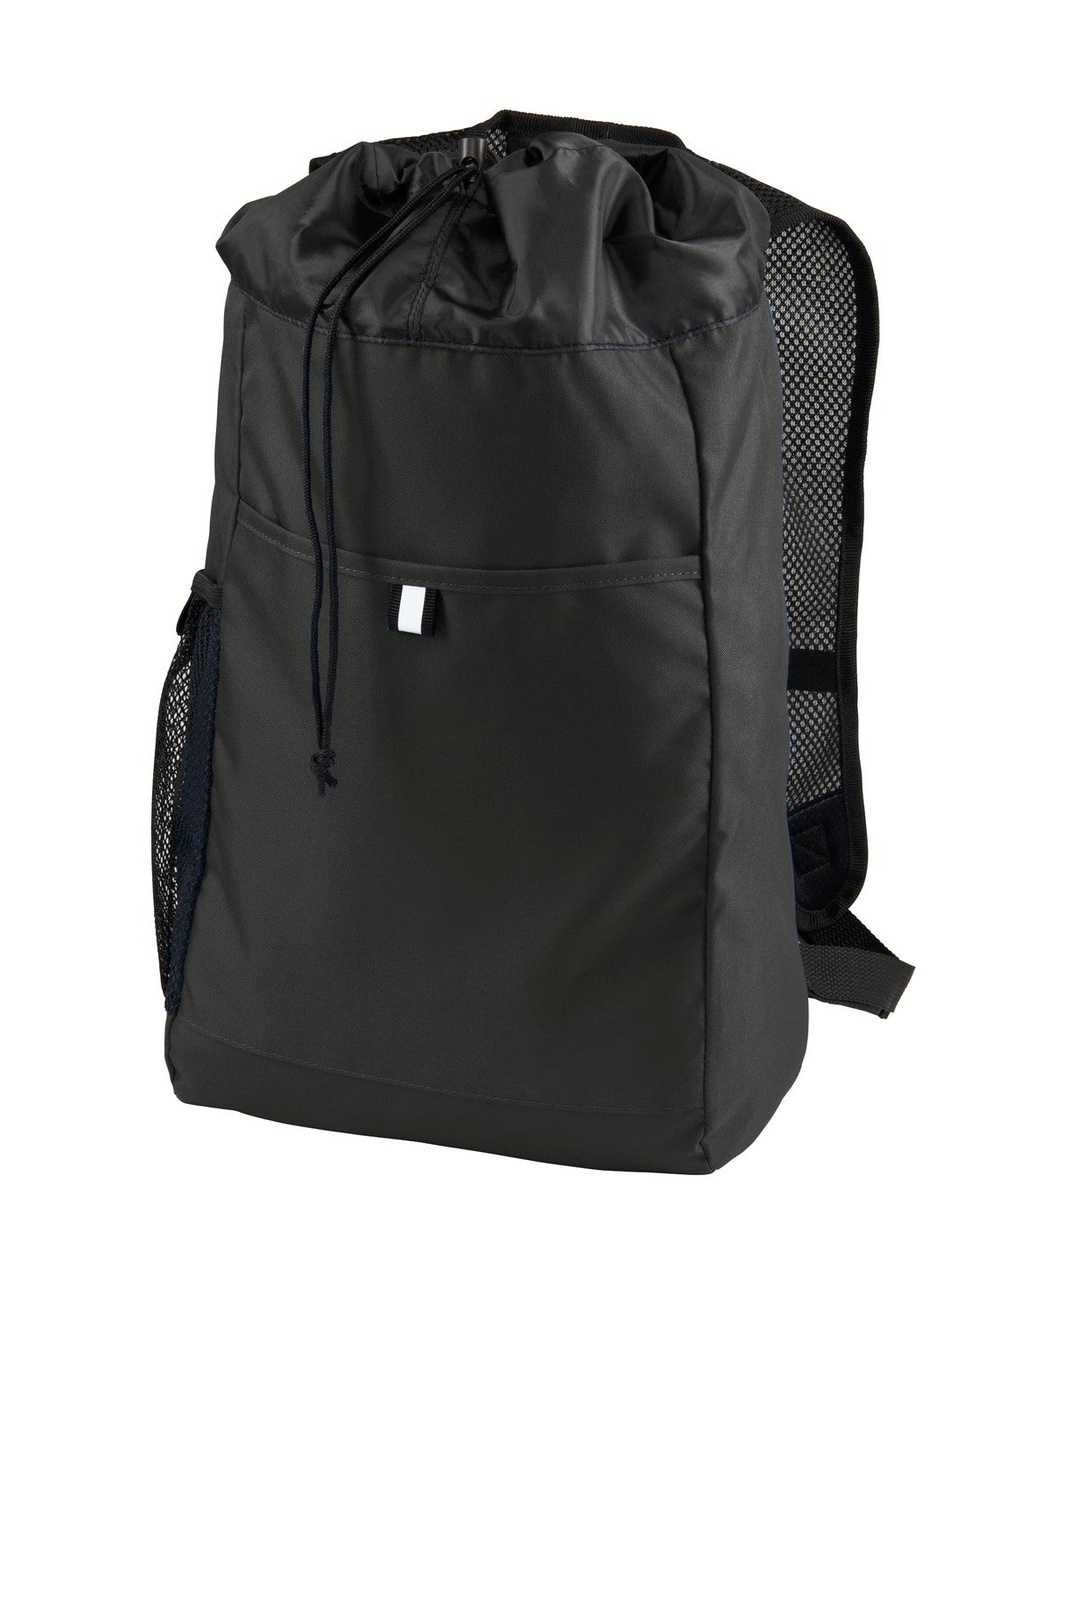 Port Authority BG211 Hybrid Backpack - Black Black - HIT a Double - 1